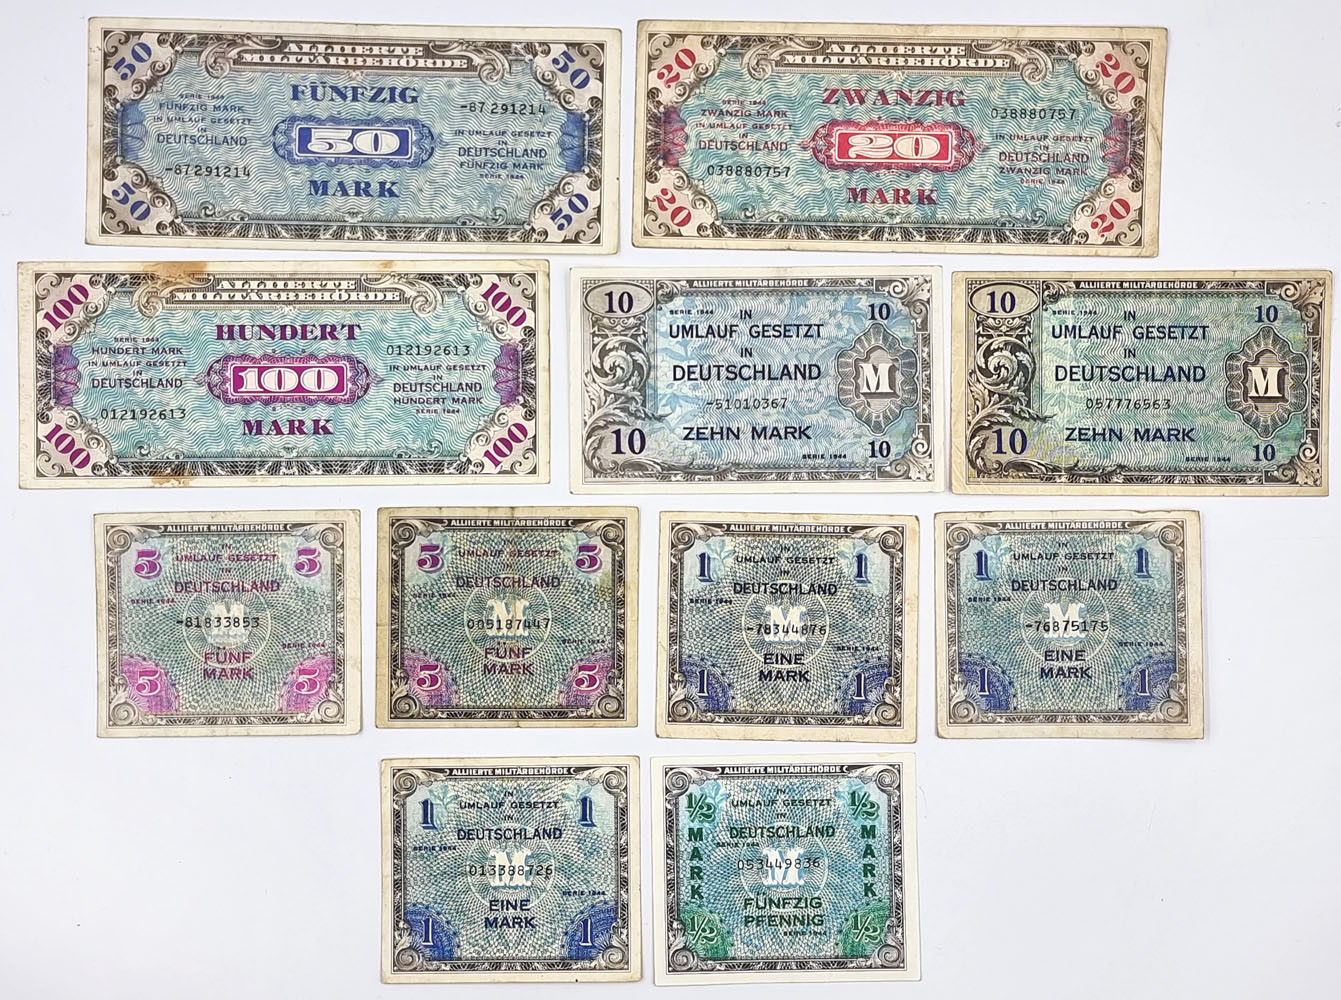 Niemcy. 1/2 marki do 100 marek 1944 Alliierte Militärbehörde, zestaw 11 banknotów